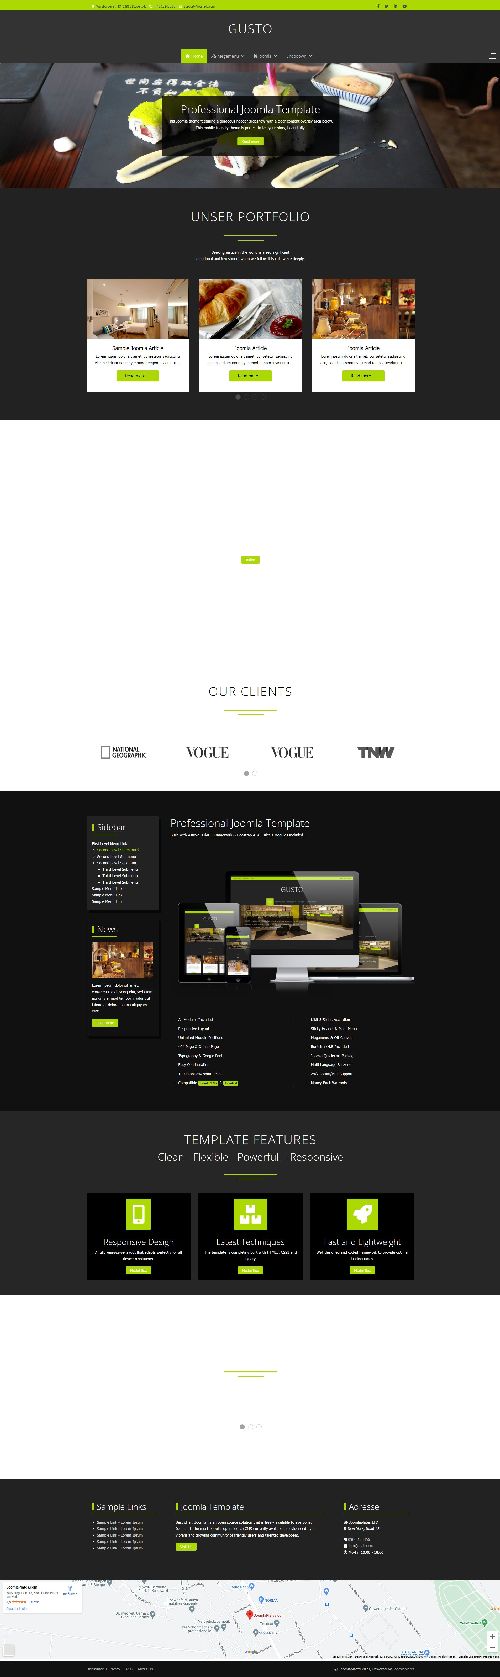 Gusto - Restaurant, Sushi Bar Websites Joomla Template